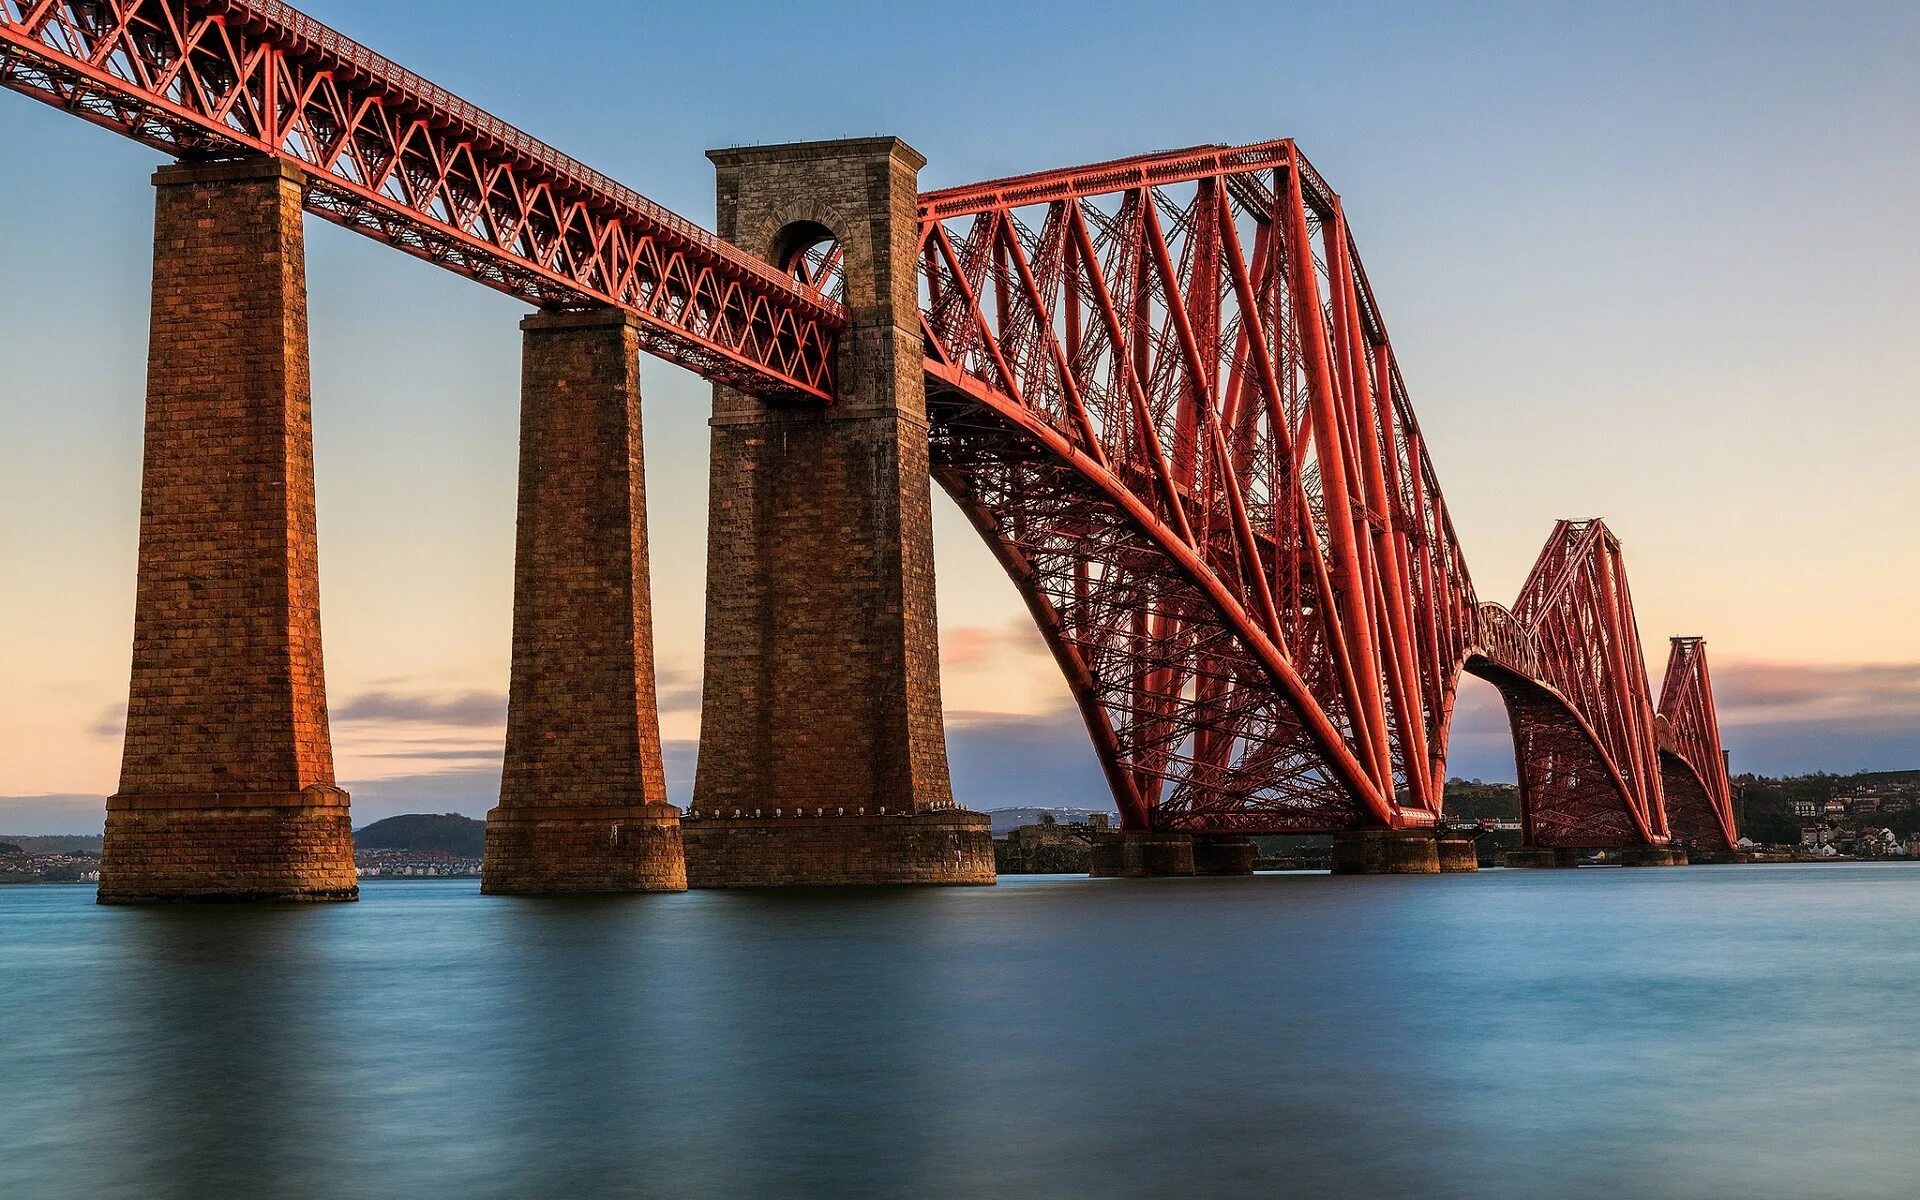 Бридж. Мост Форт-бридж Эдинбург. Мост Форт-бридж, Эдинбург, Шотландия. ОСТ Форт-бридж, Эдинбург, Шотландия. Фортский мост в Шотландии.